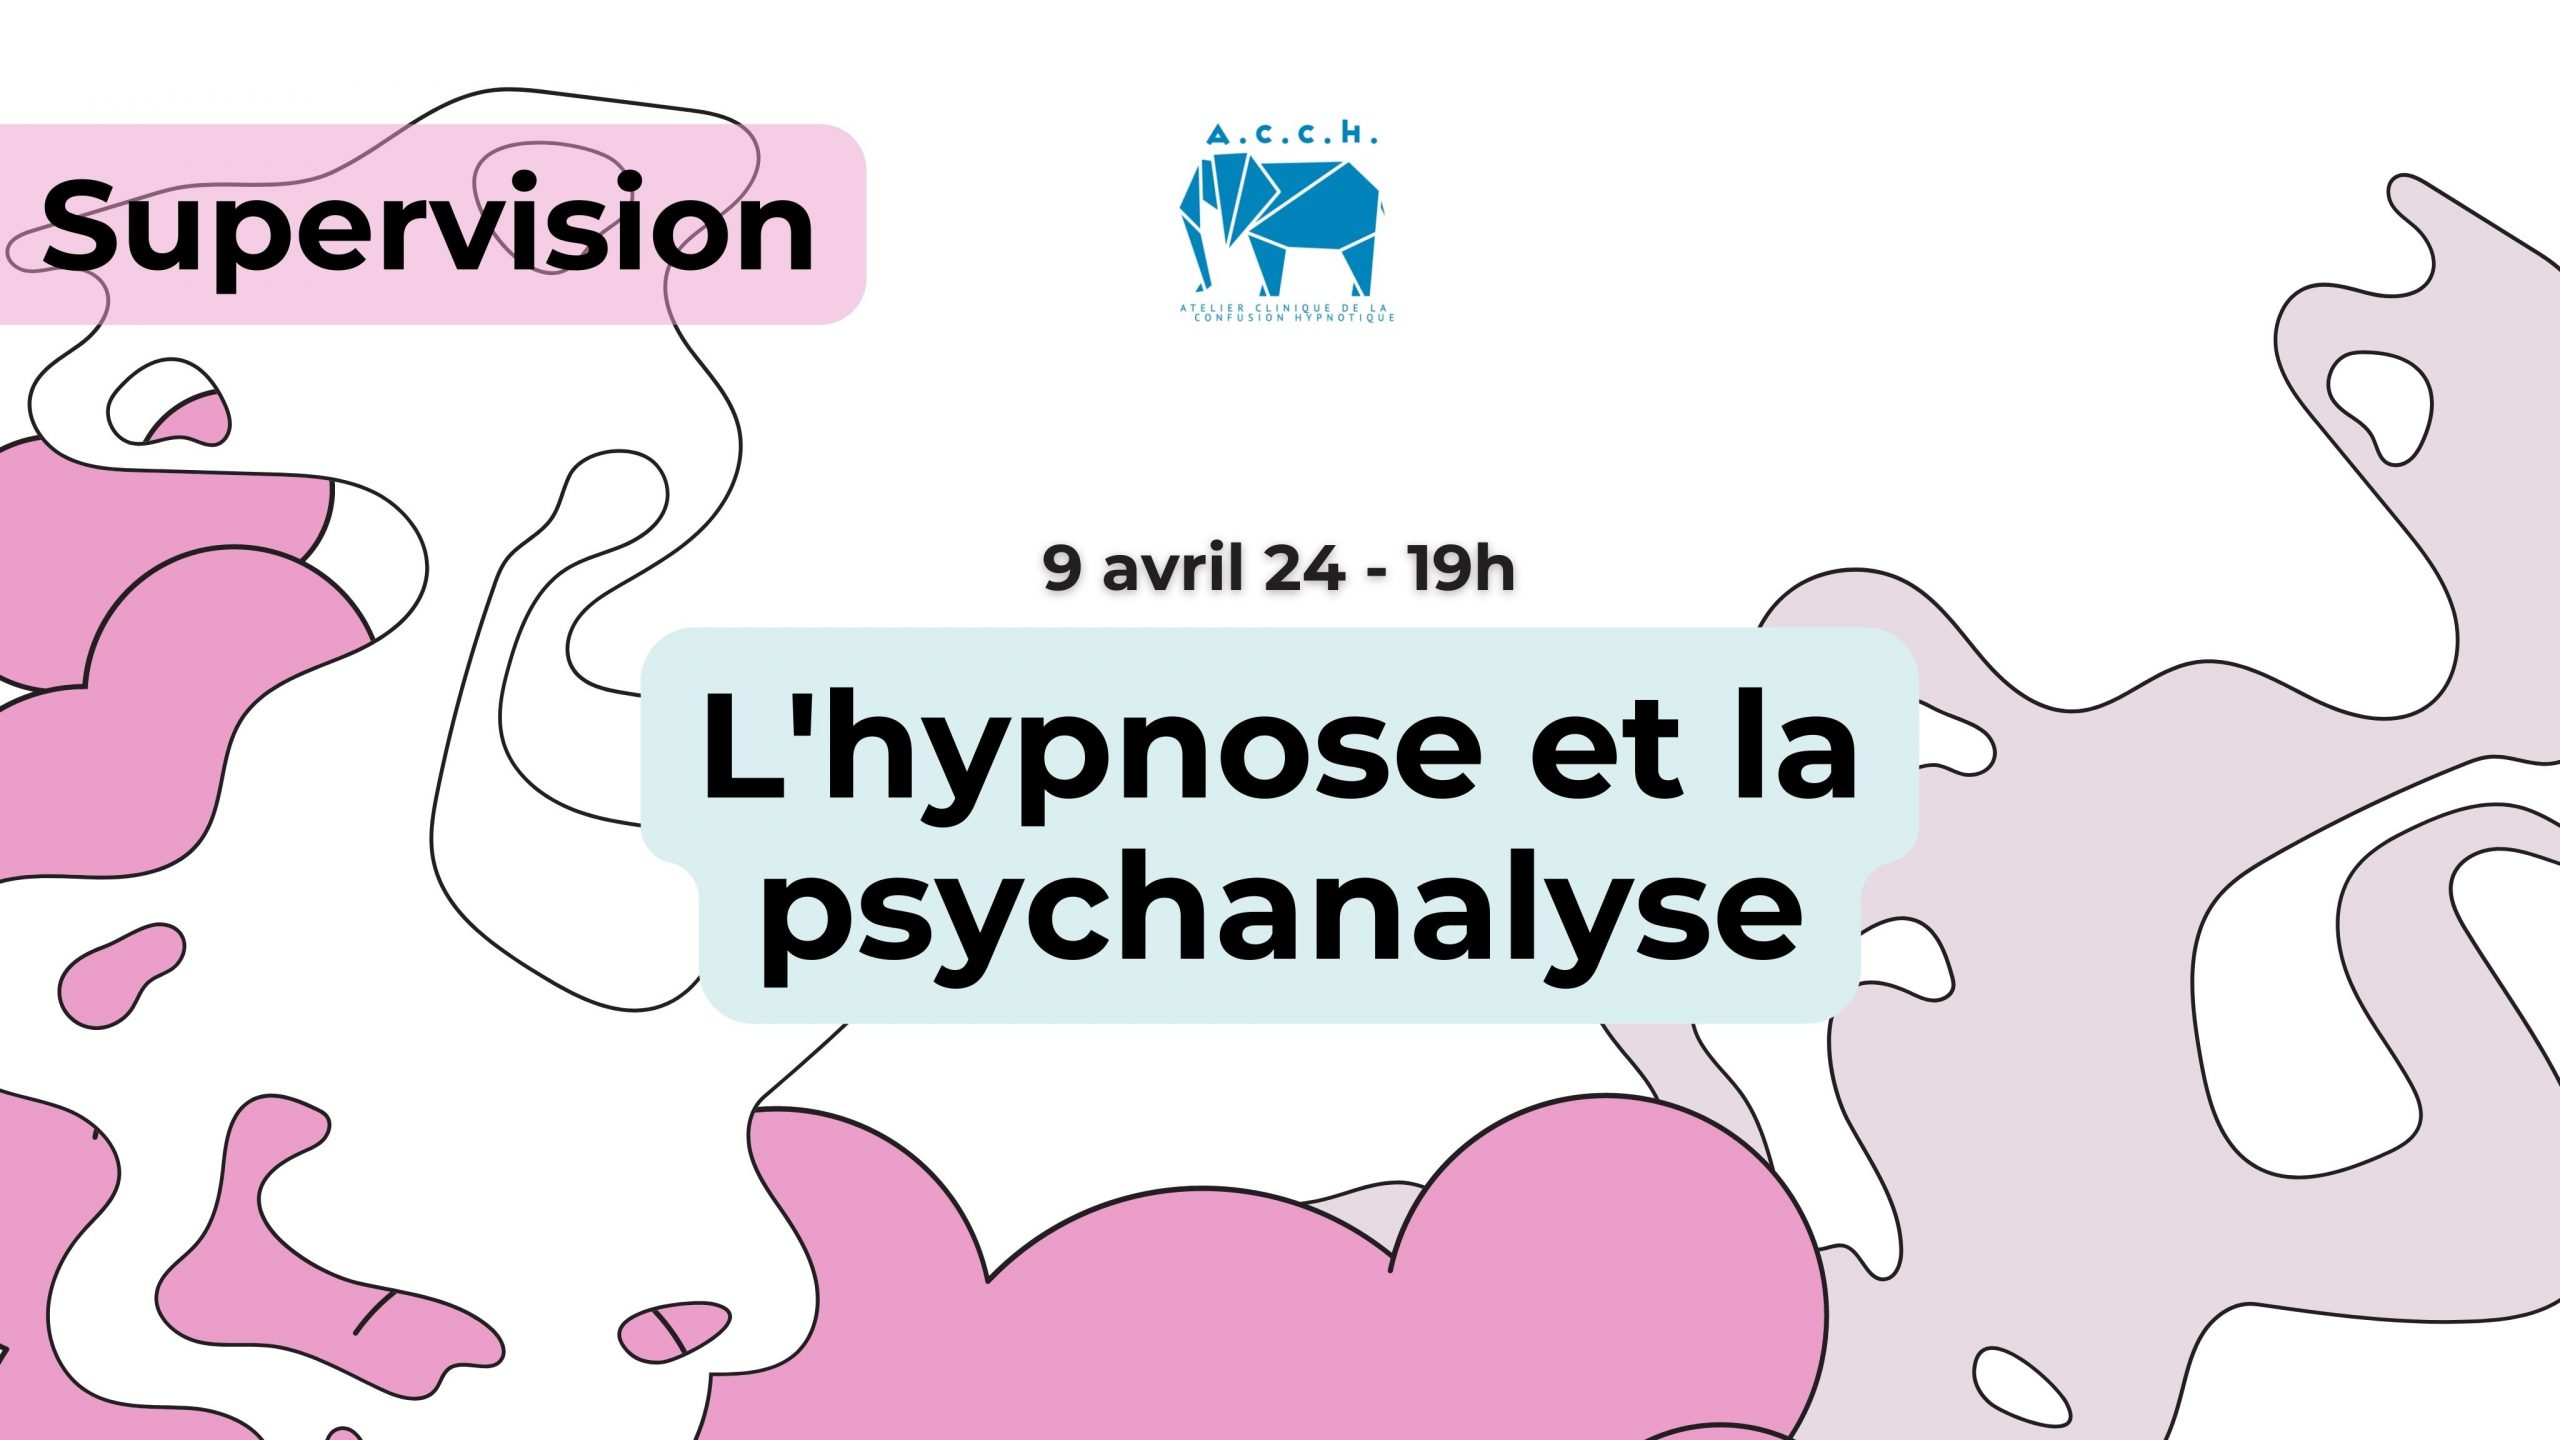 Supervision : L’hypnose et la psychanalyse